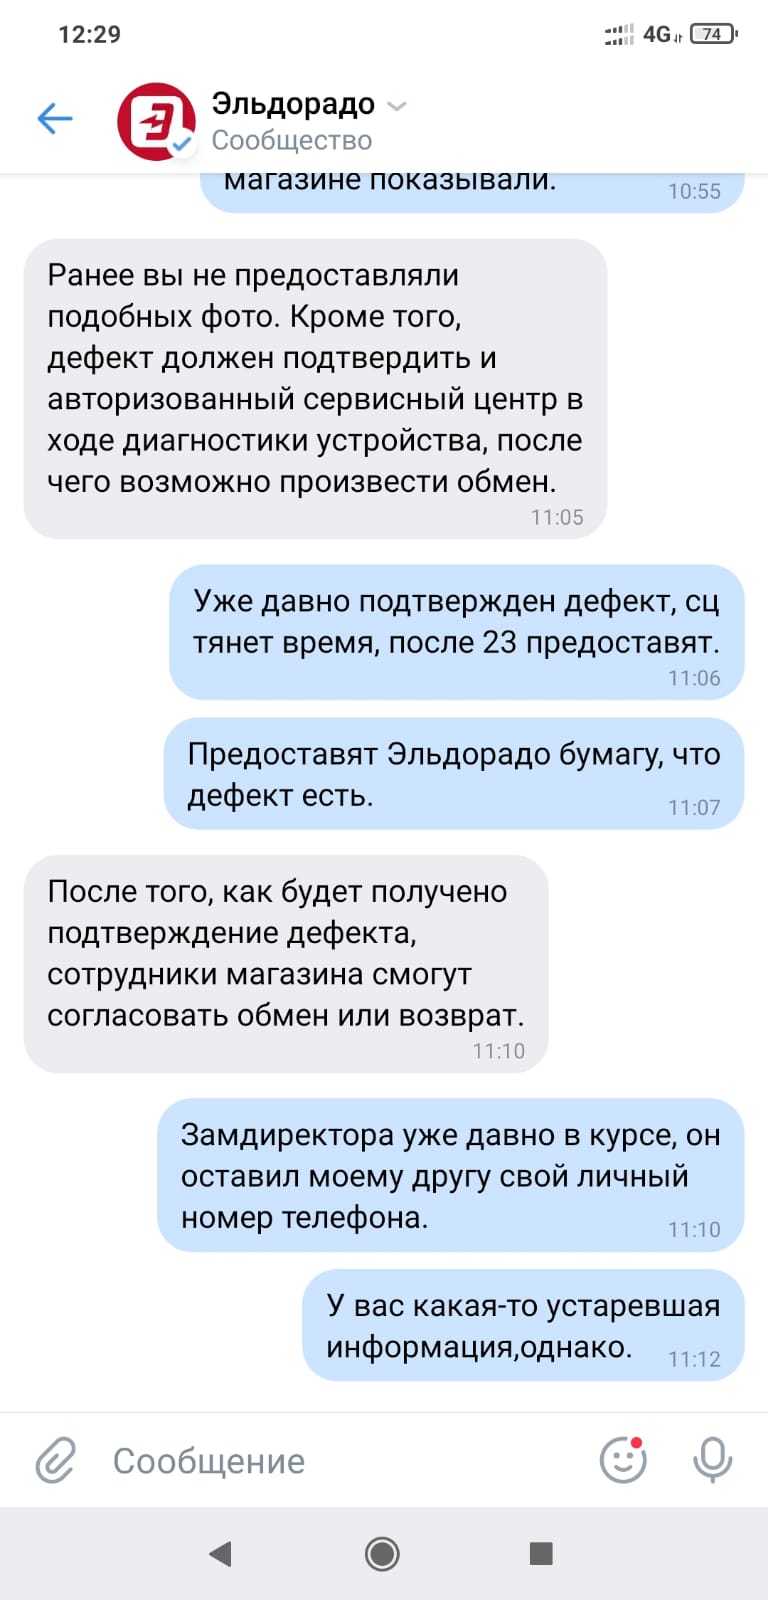 Эльдорадо Мичуринск Телефон Магазина